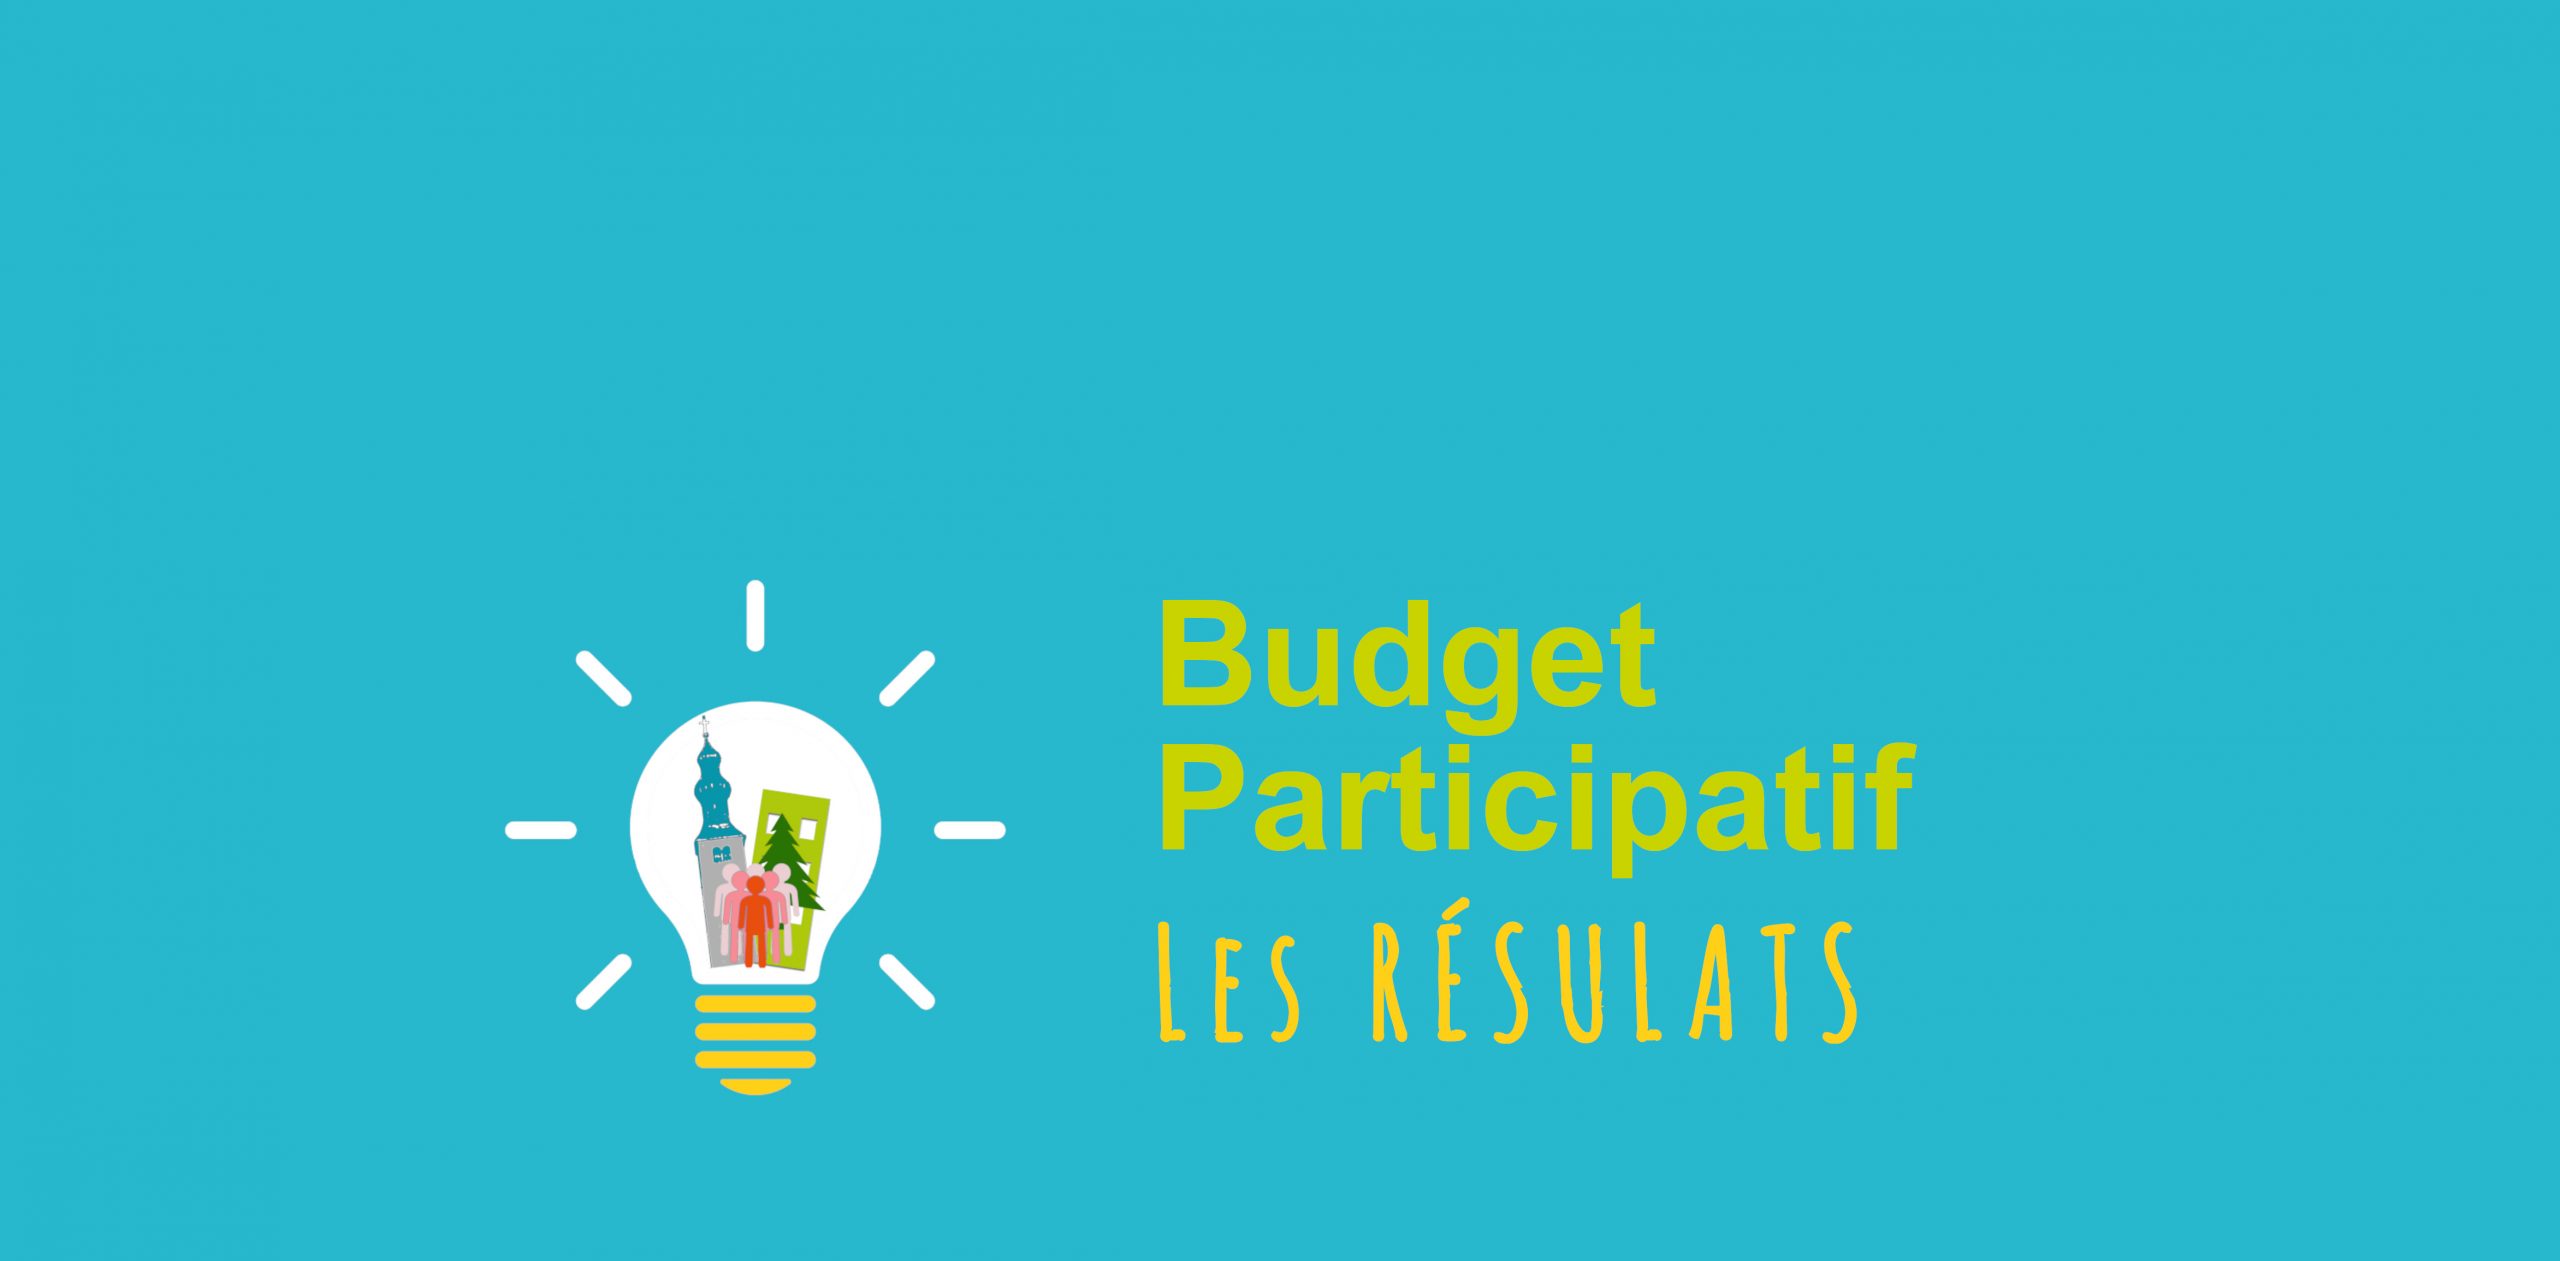 Budget participatif : les RÉSULTATS